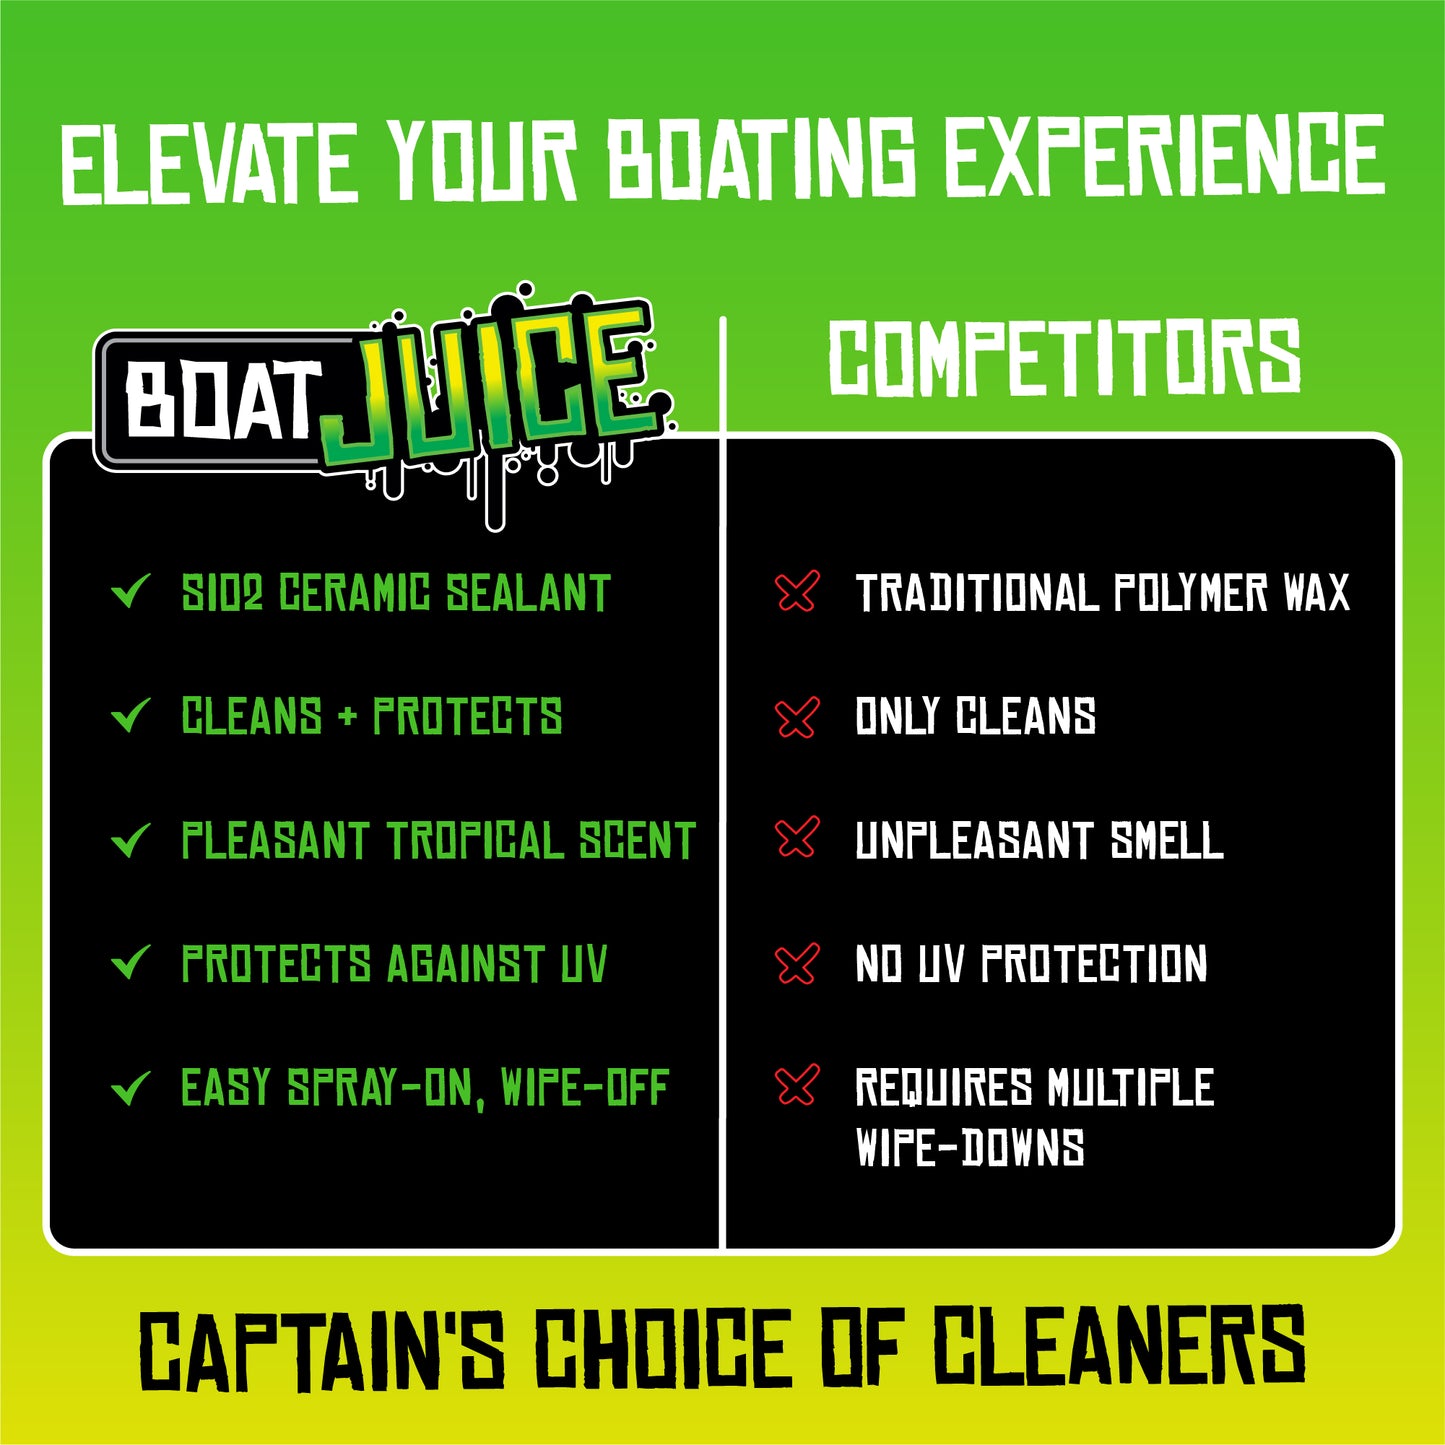 Boat Juice Exterior Cleaner Bundle